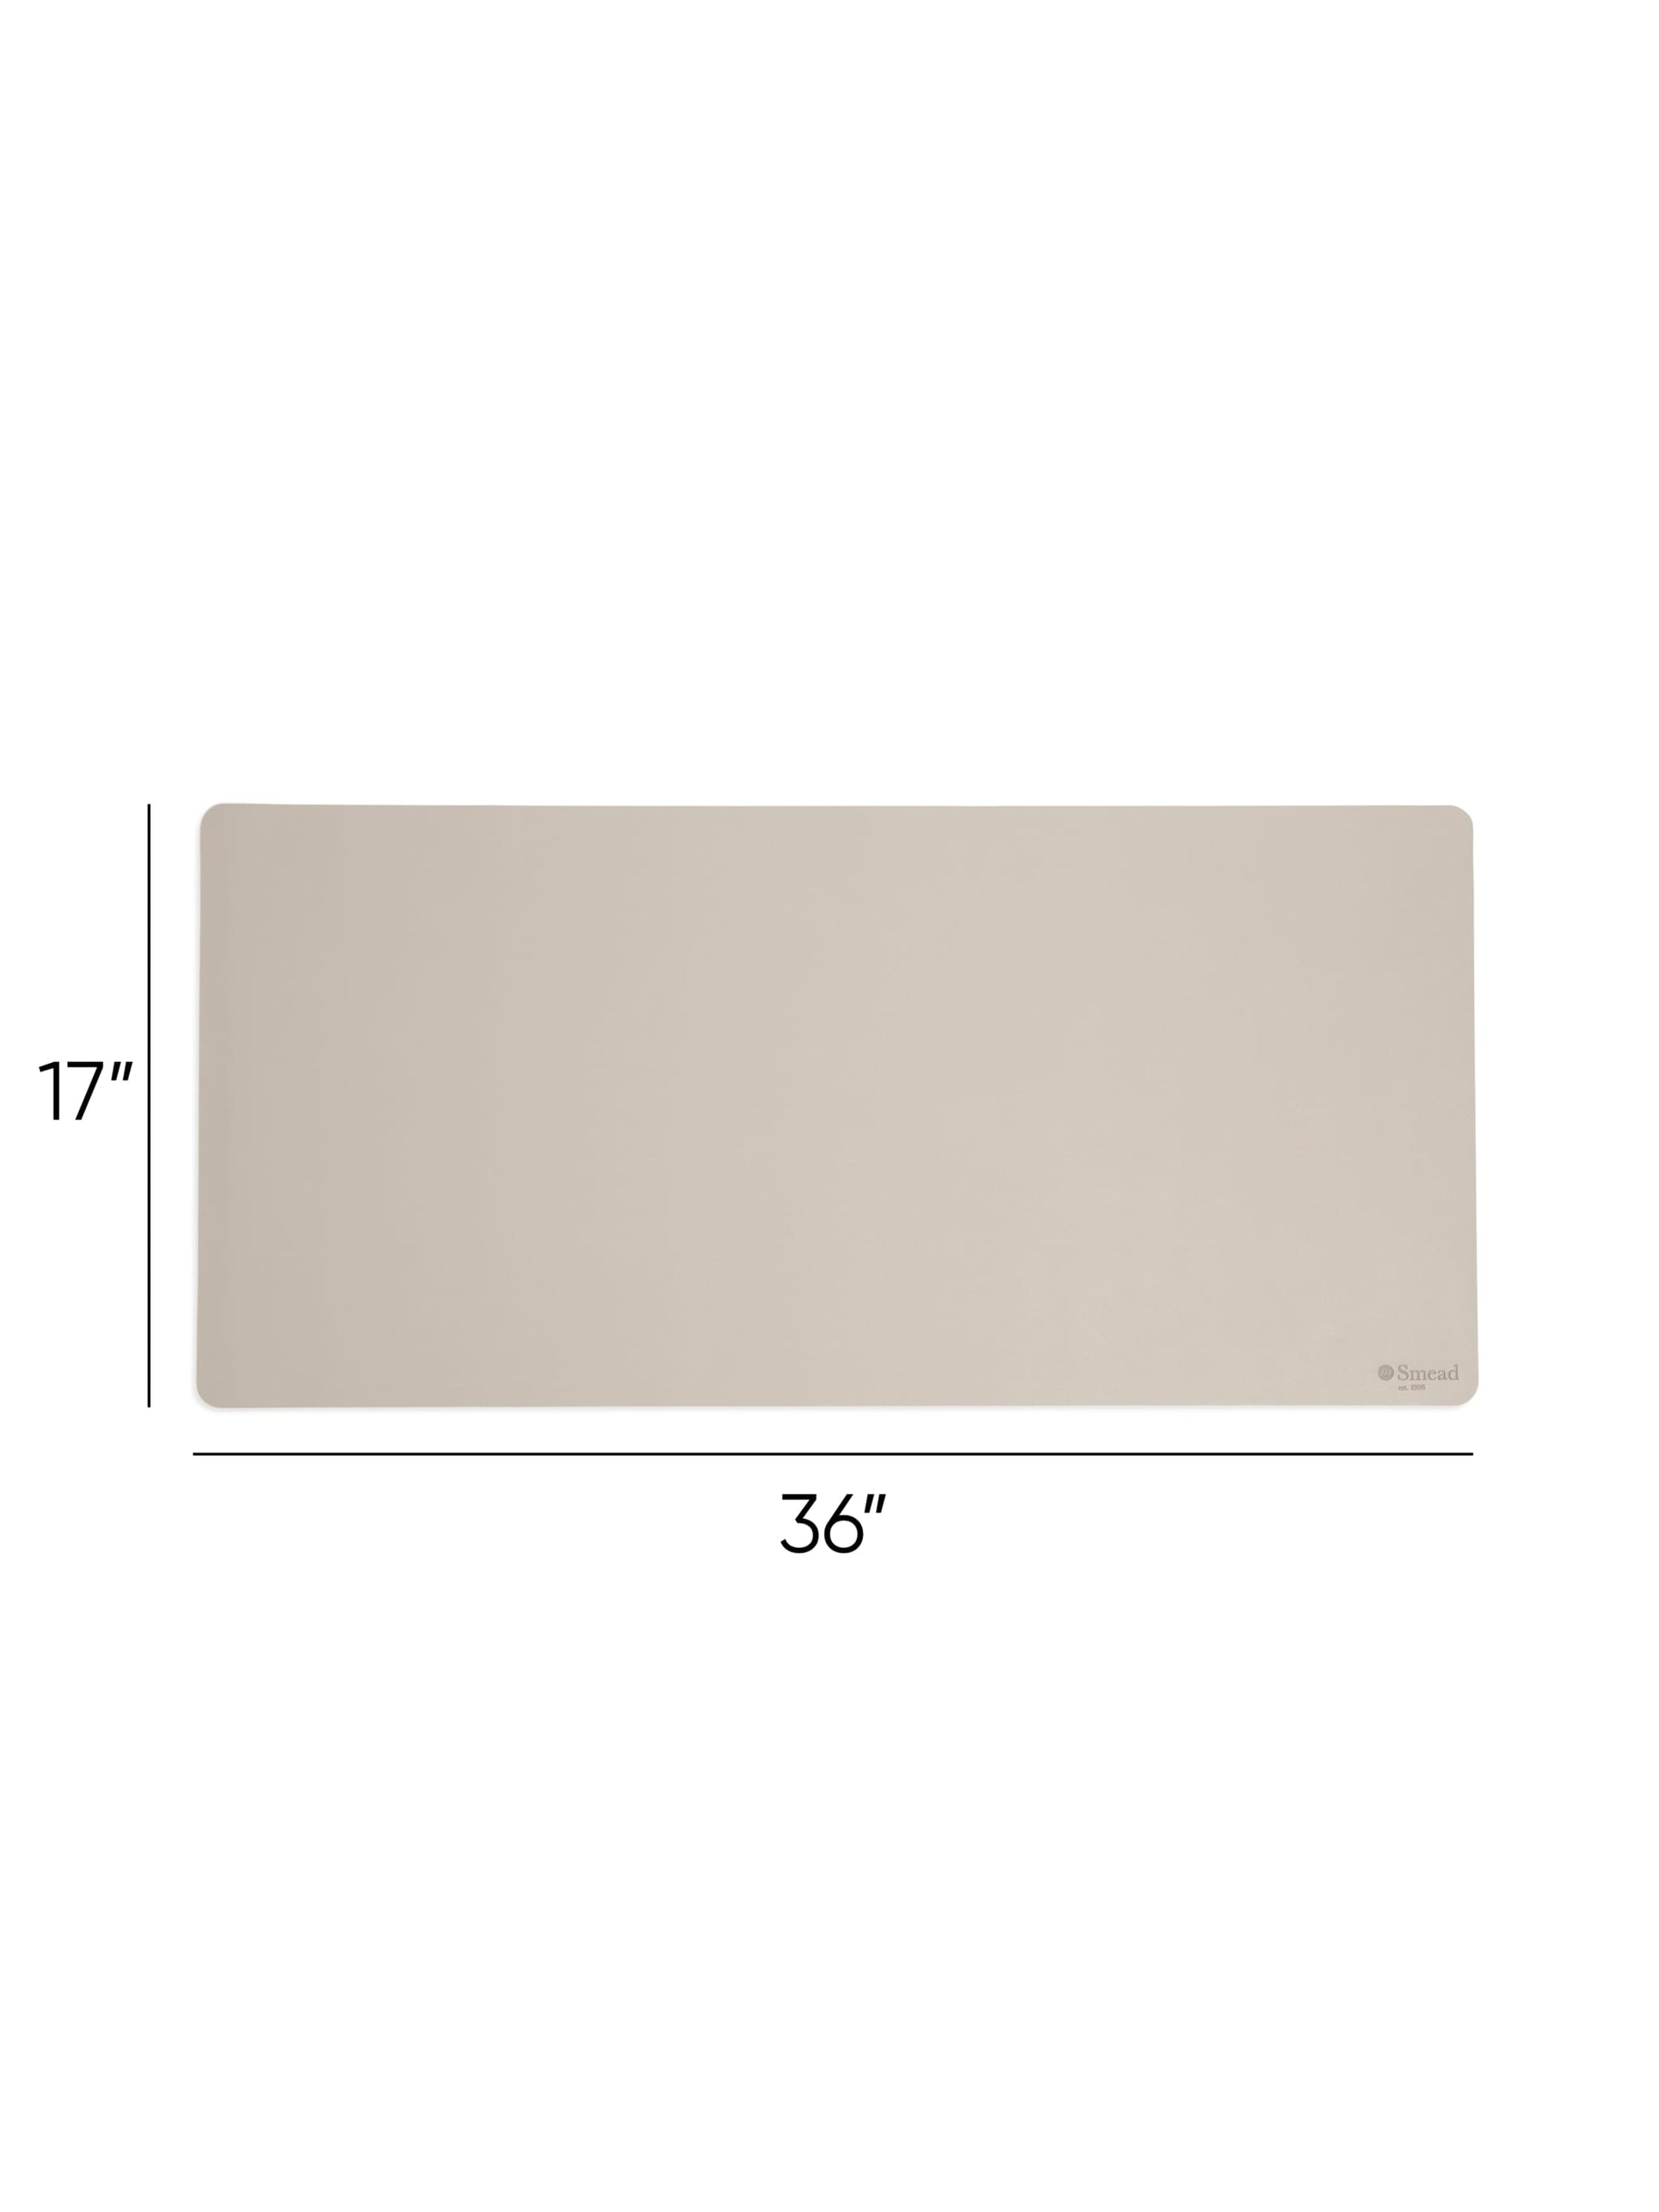 Vegan Leather Desk Pad, Sandstone Color, 36"X17" Size, 086486648264